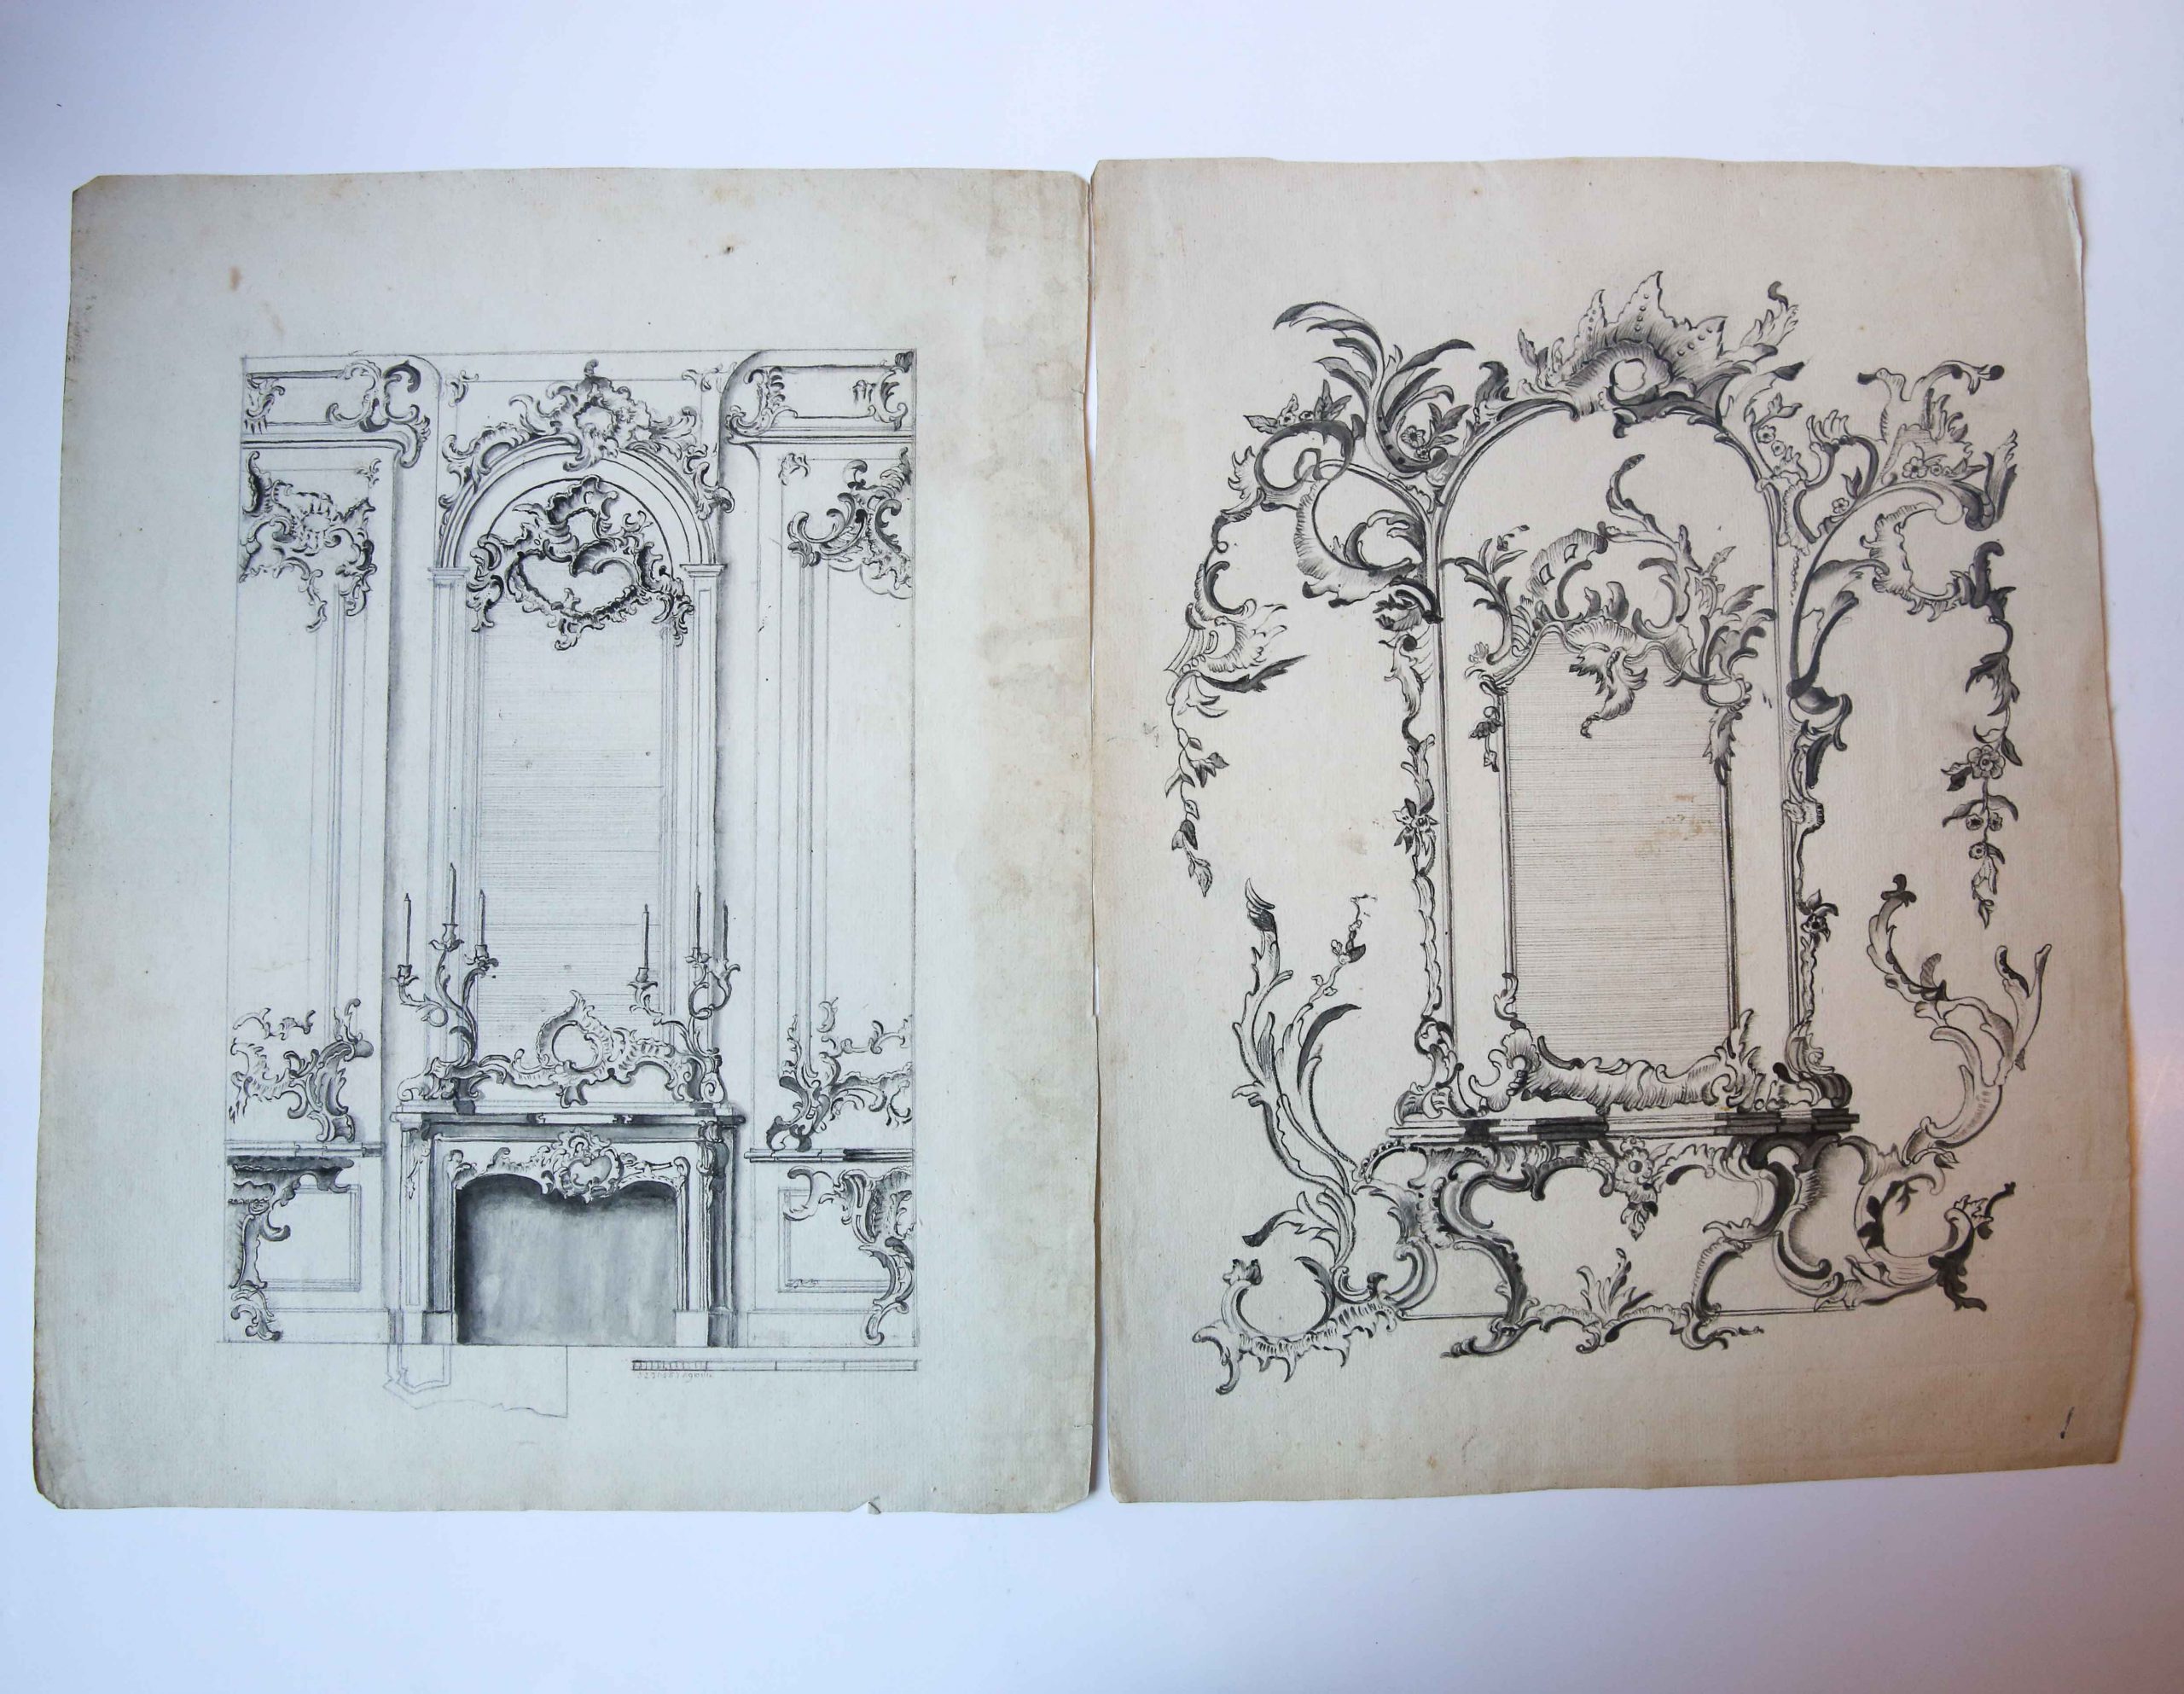 [Antique drawing/ tekening] Designs for a Mirror with Consolle and a fireplace (ontwerpen voor spiegel met console en vuurplaats).